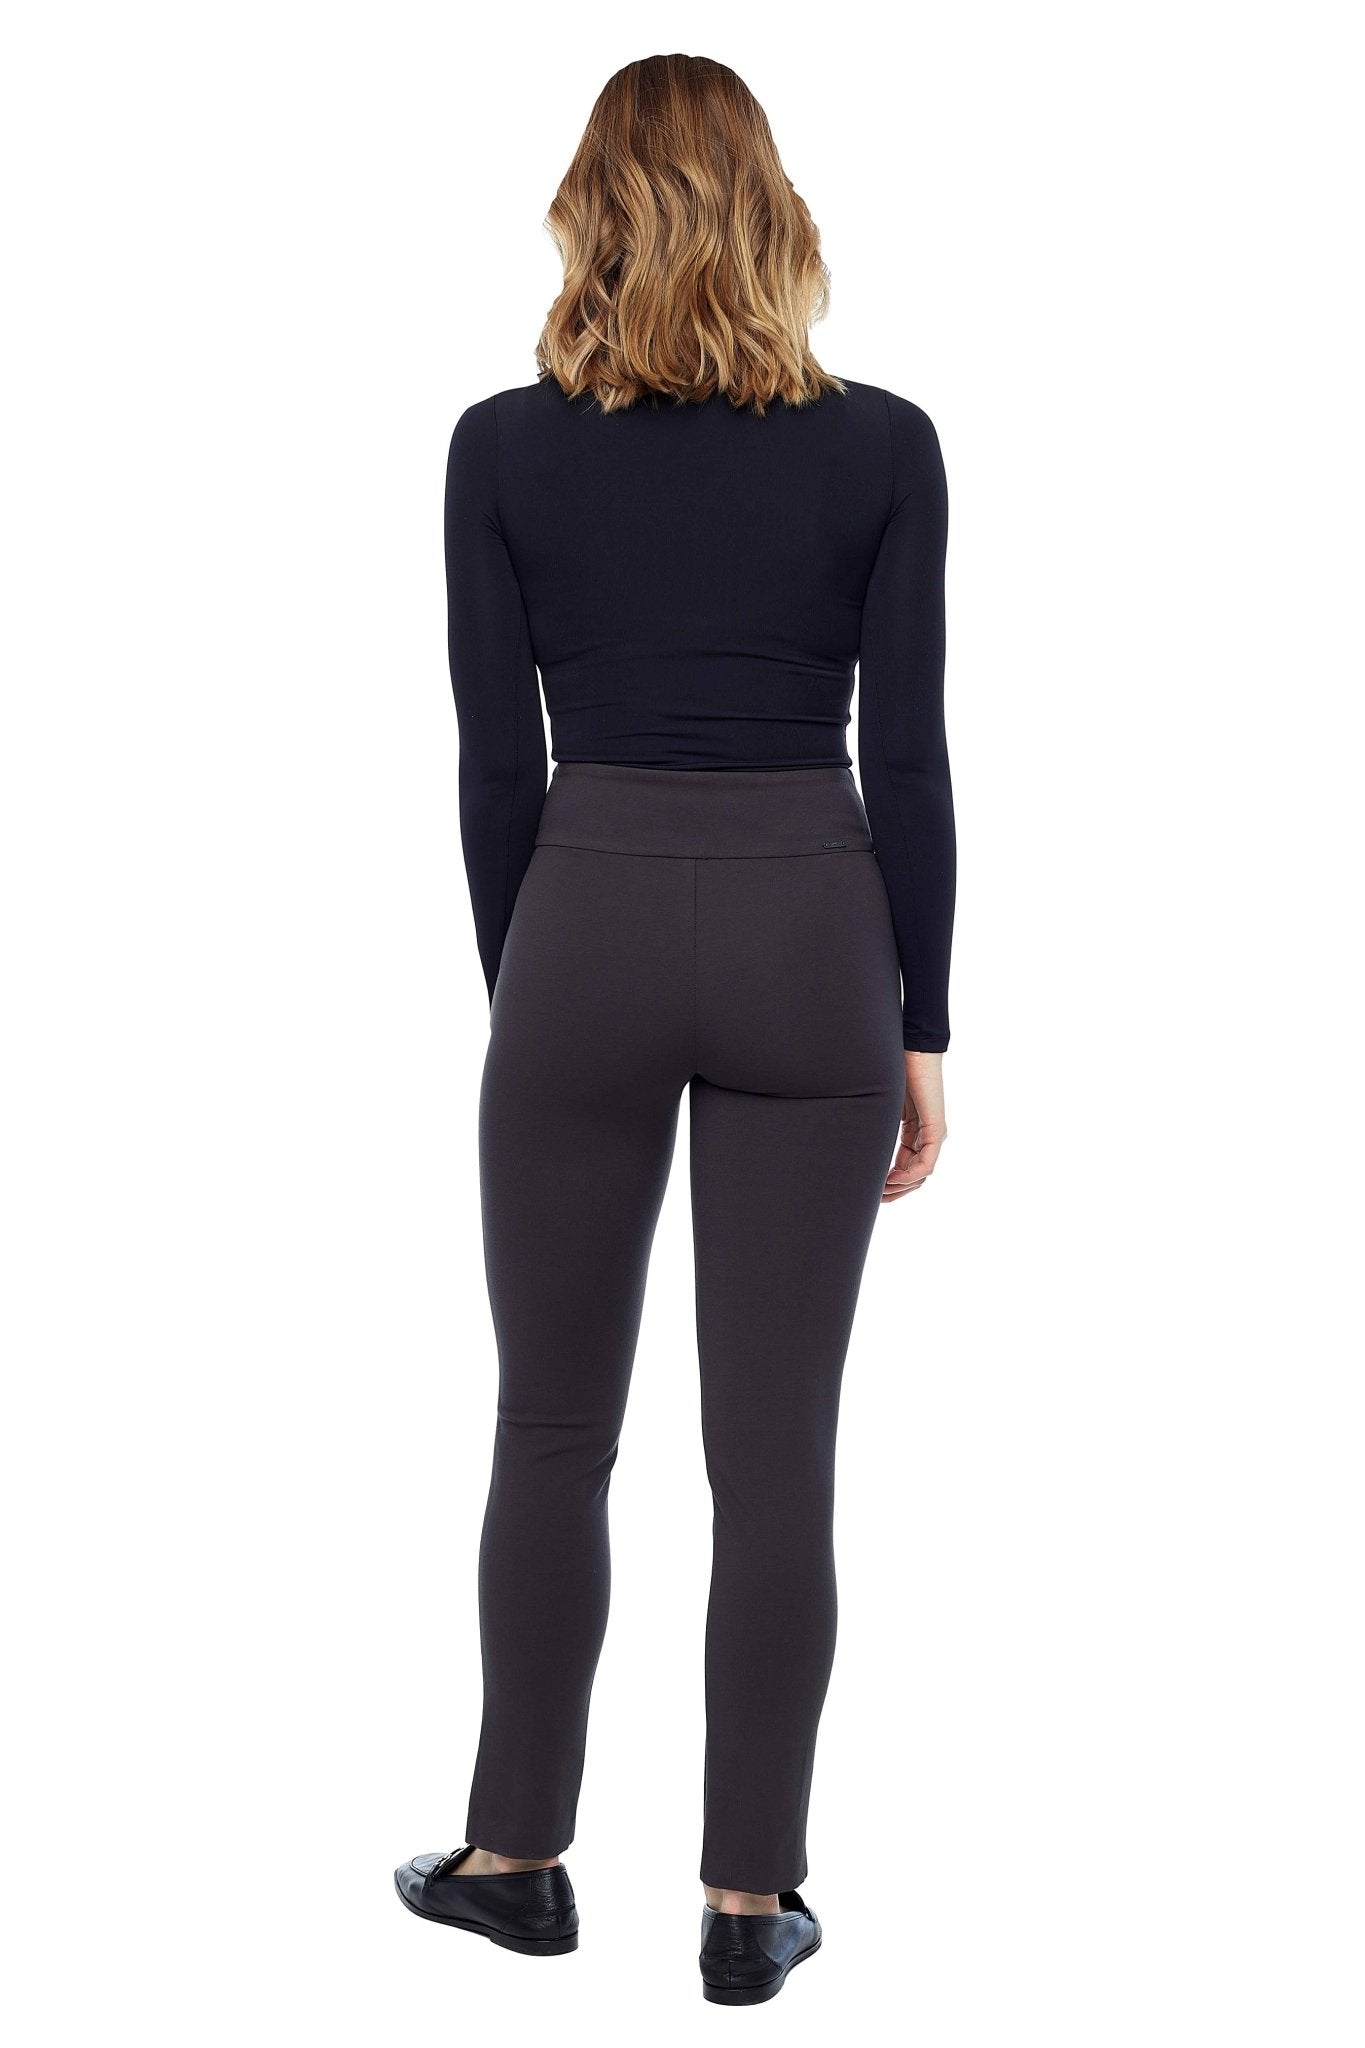 Shop Up! Pant - Ponte Slim Ankle Style 67375 | Slate Grey - Up Pants